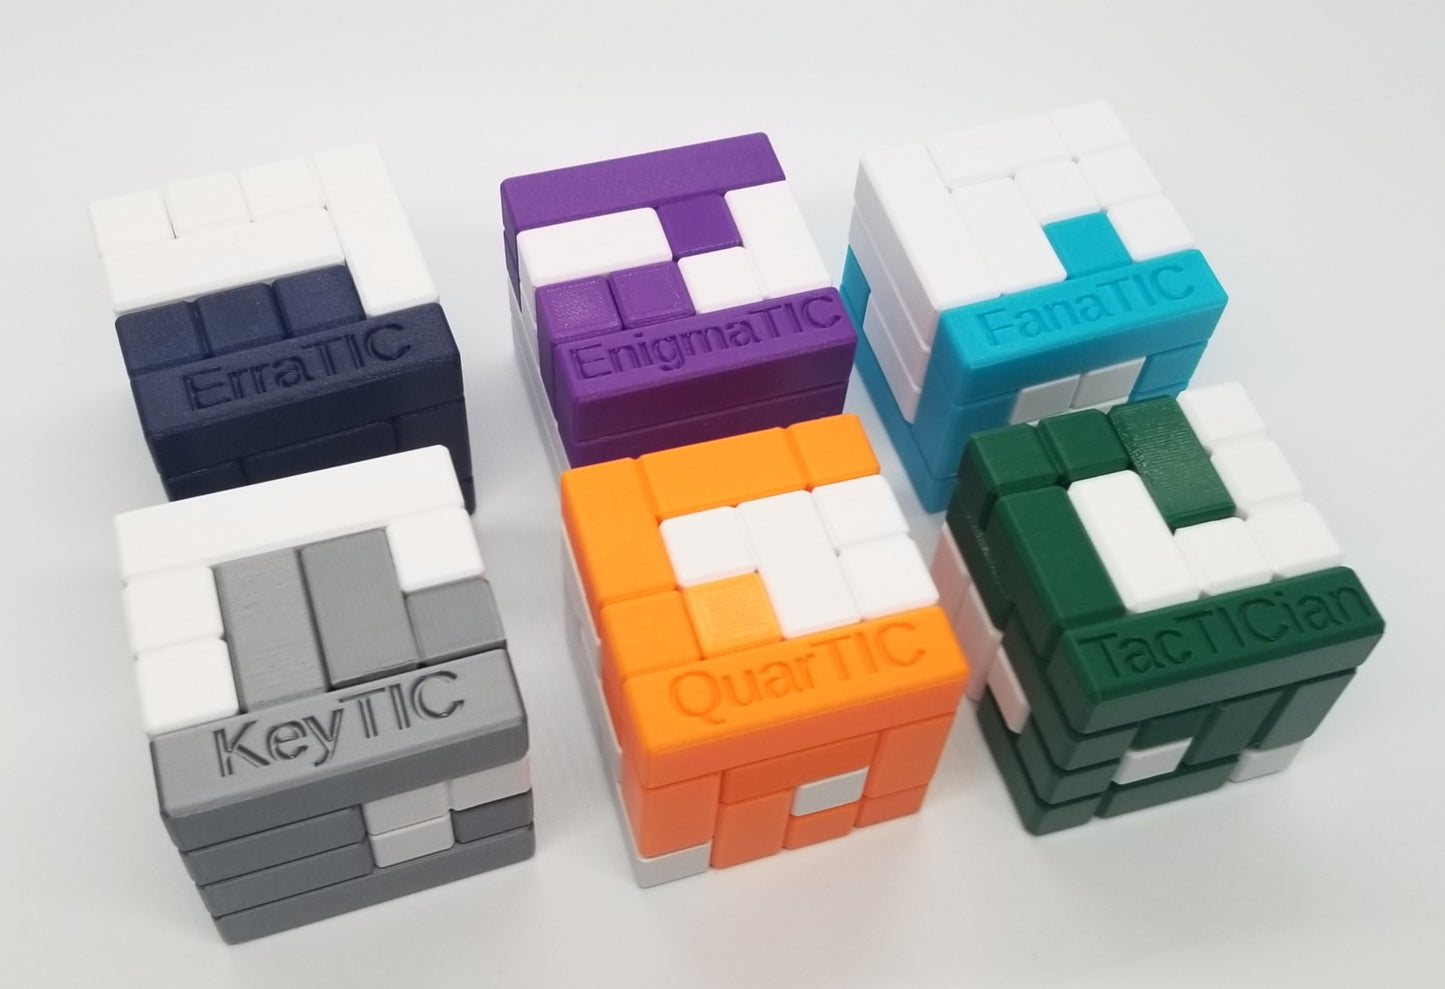 Six Piece Puzzles Volume 1 - Turning Interlocking Cube Puzzles